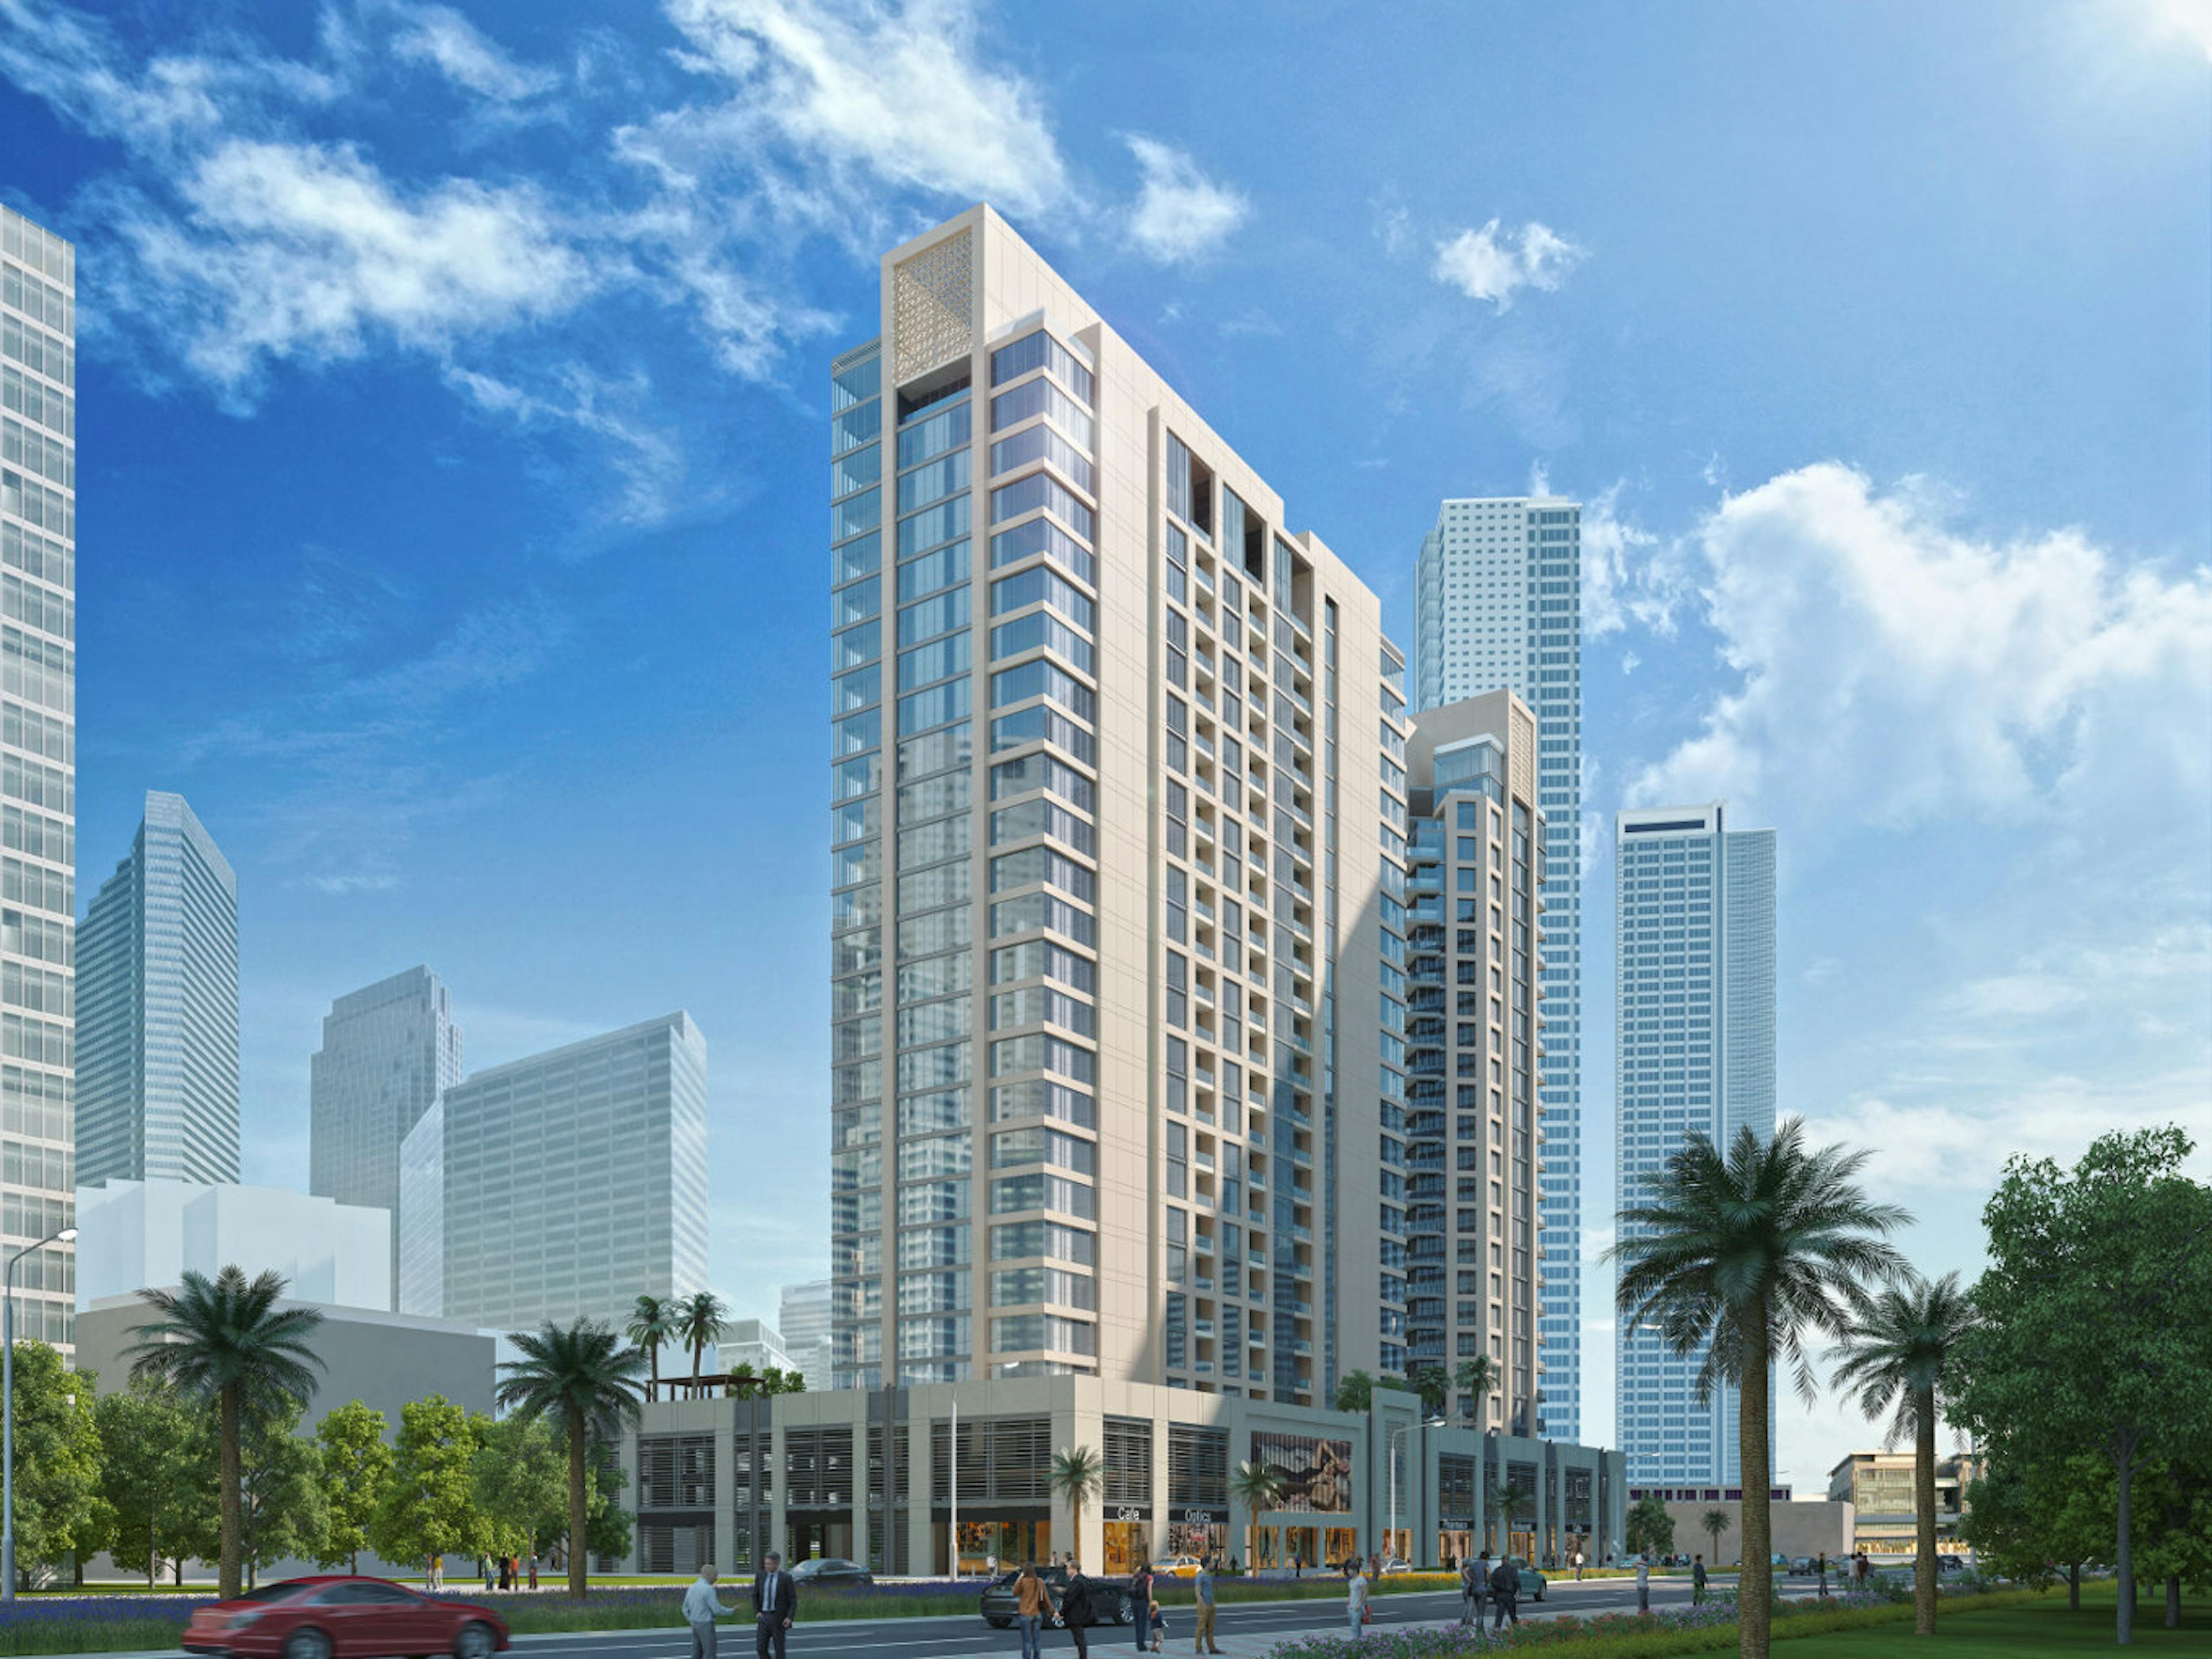 Dubai Properties (DP) & Meraas Holding